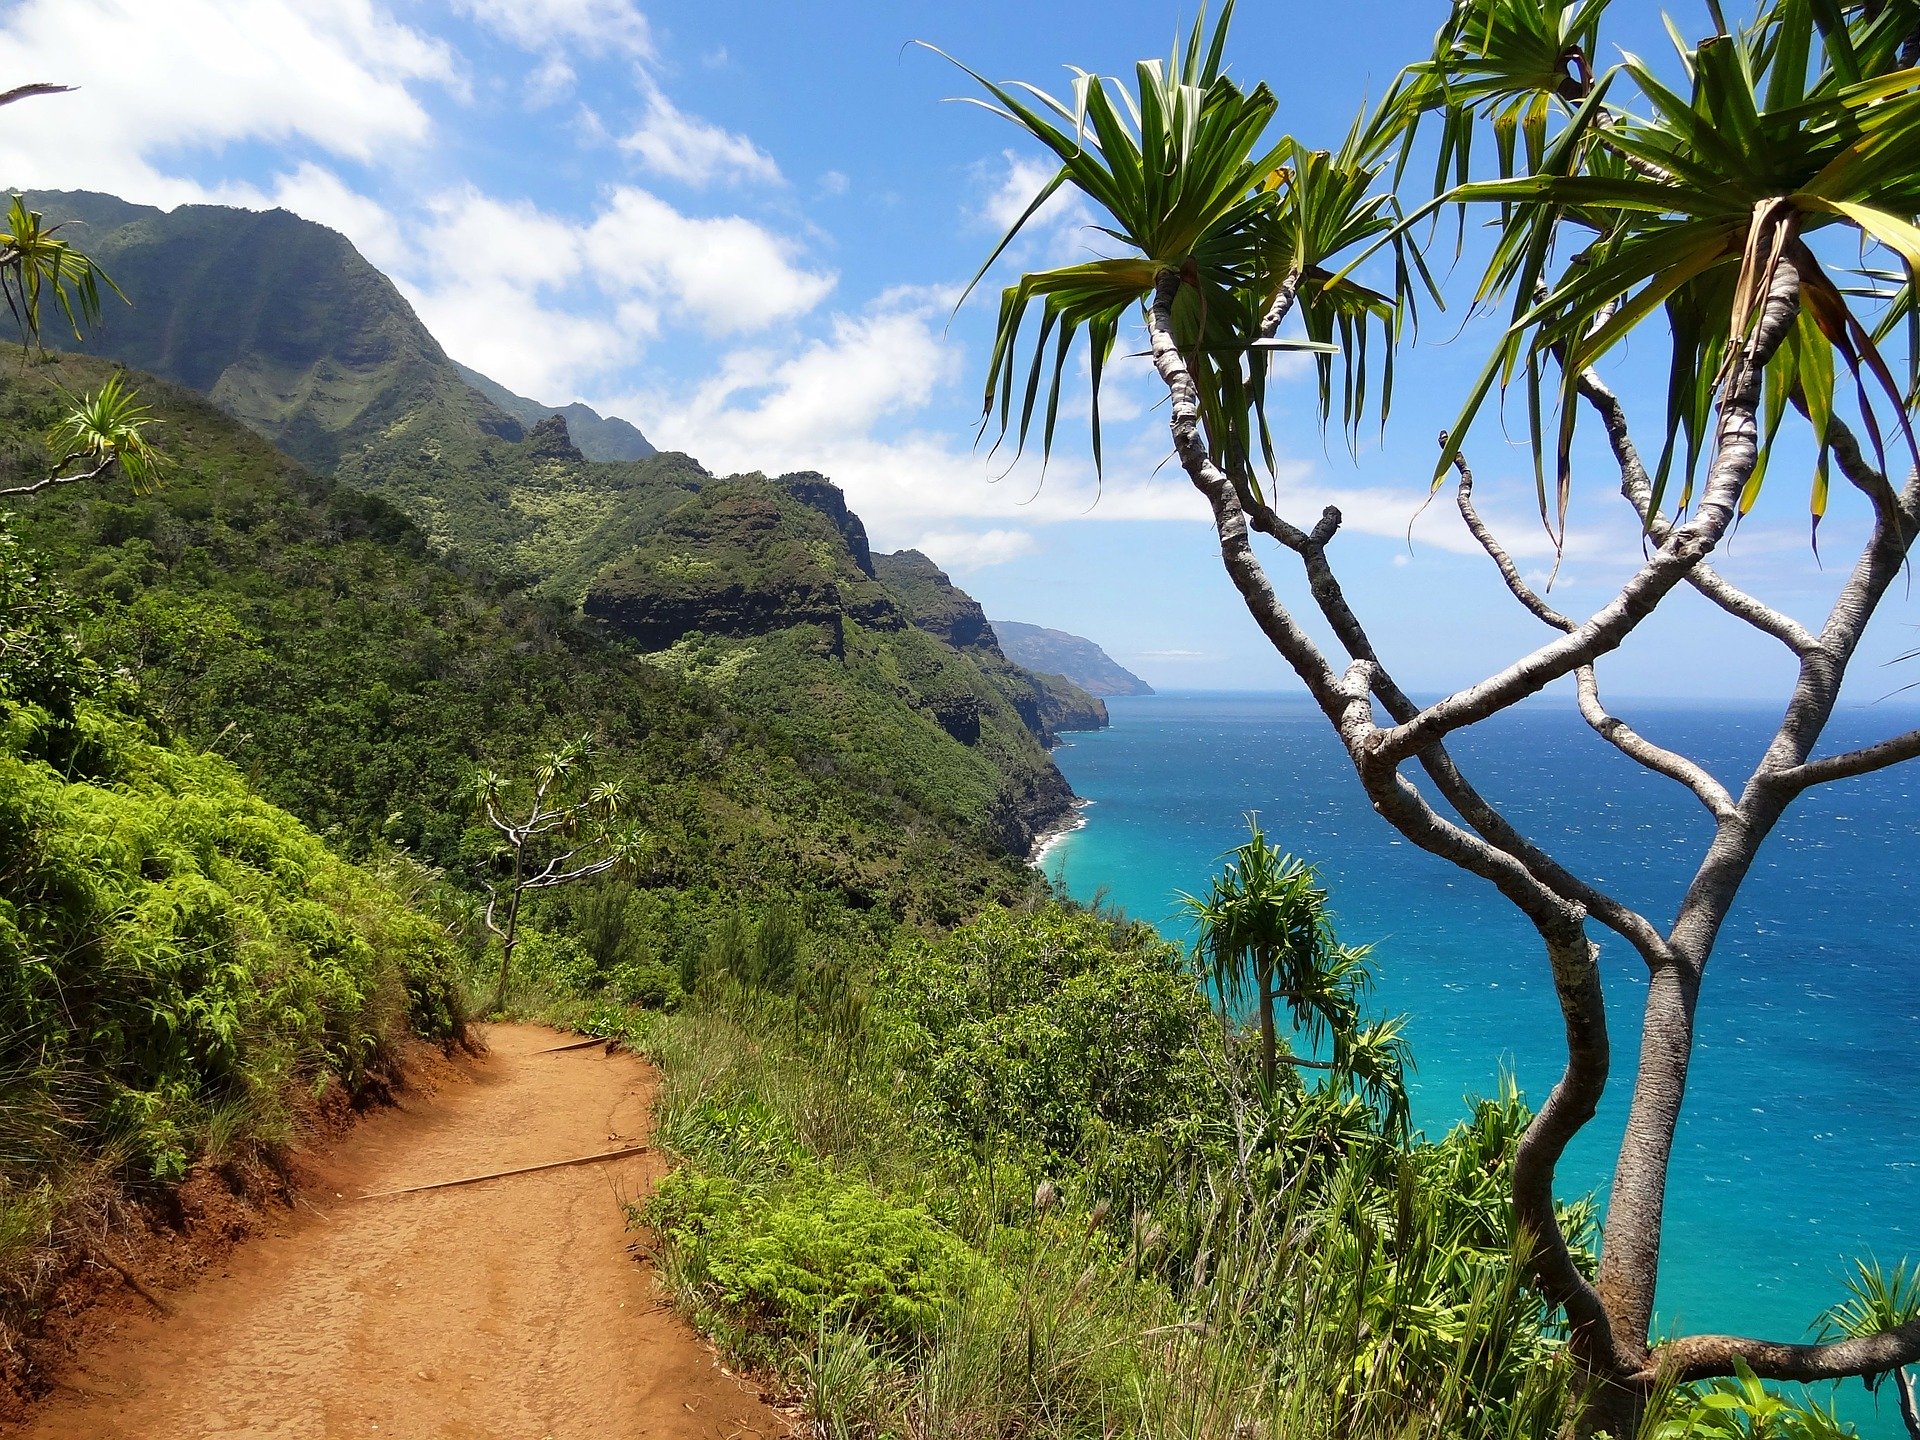 My Travels to Hawaii – A Hawaiian Cannabis Consultant’s Tale